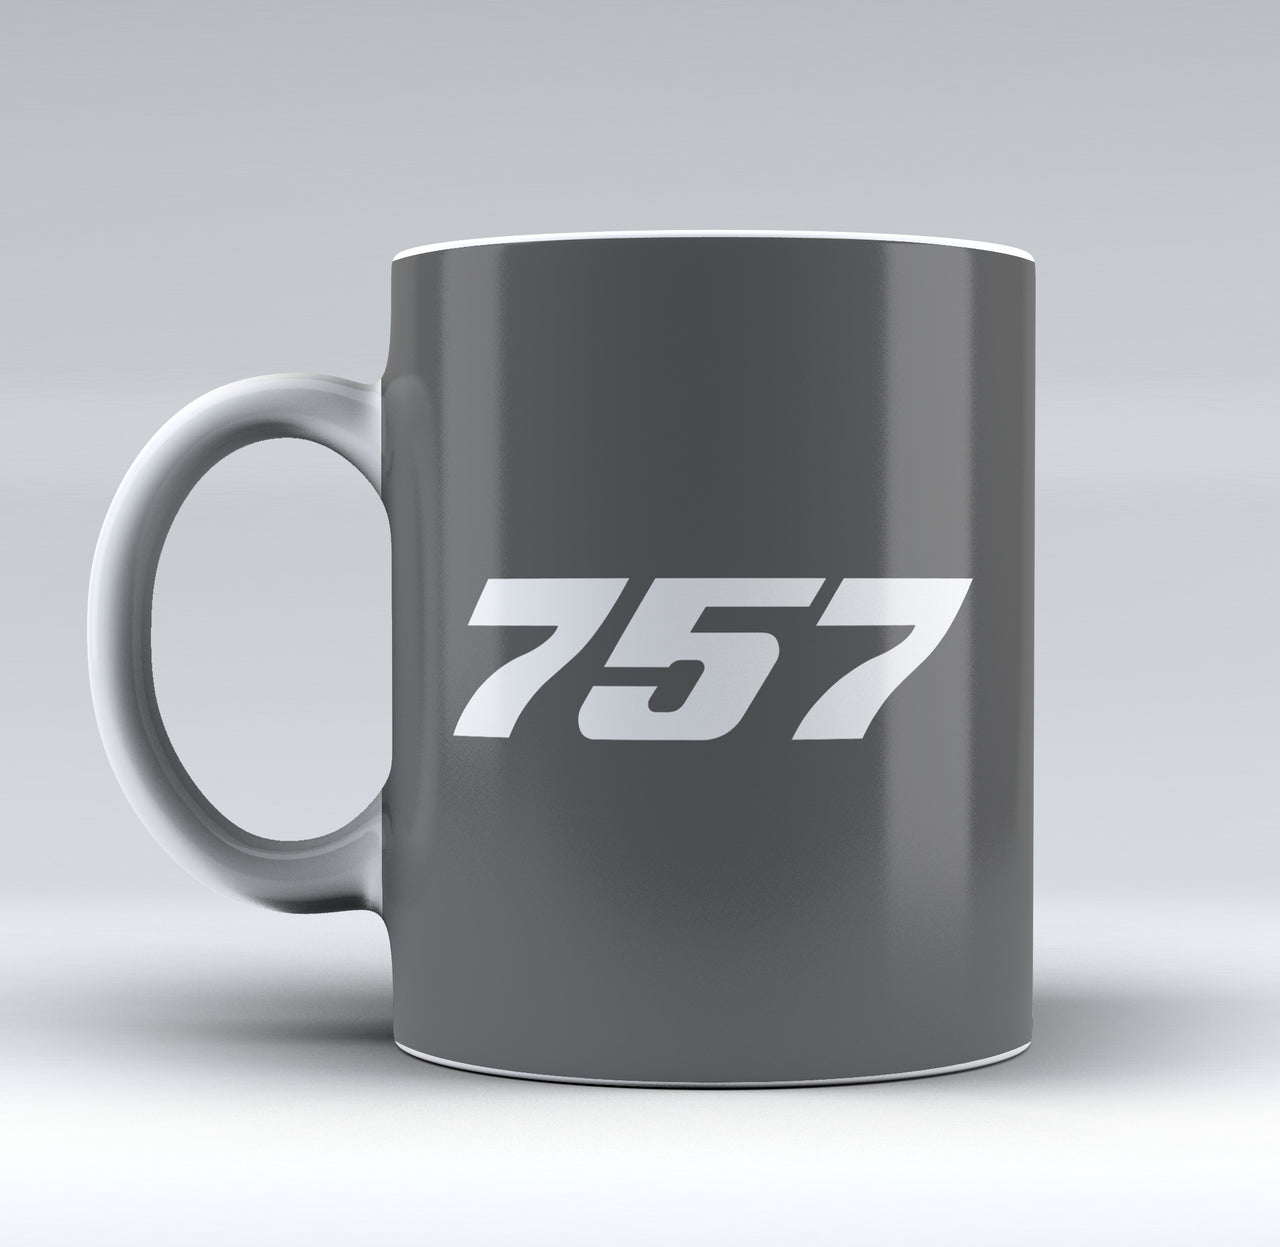 757 Flat Text Designed Mugs